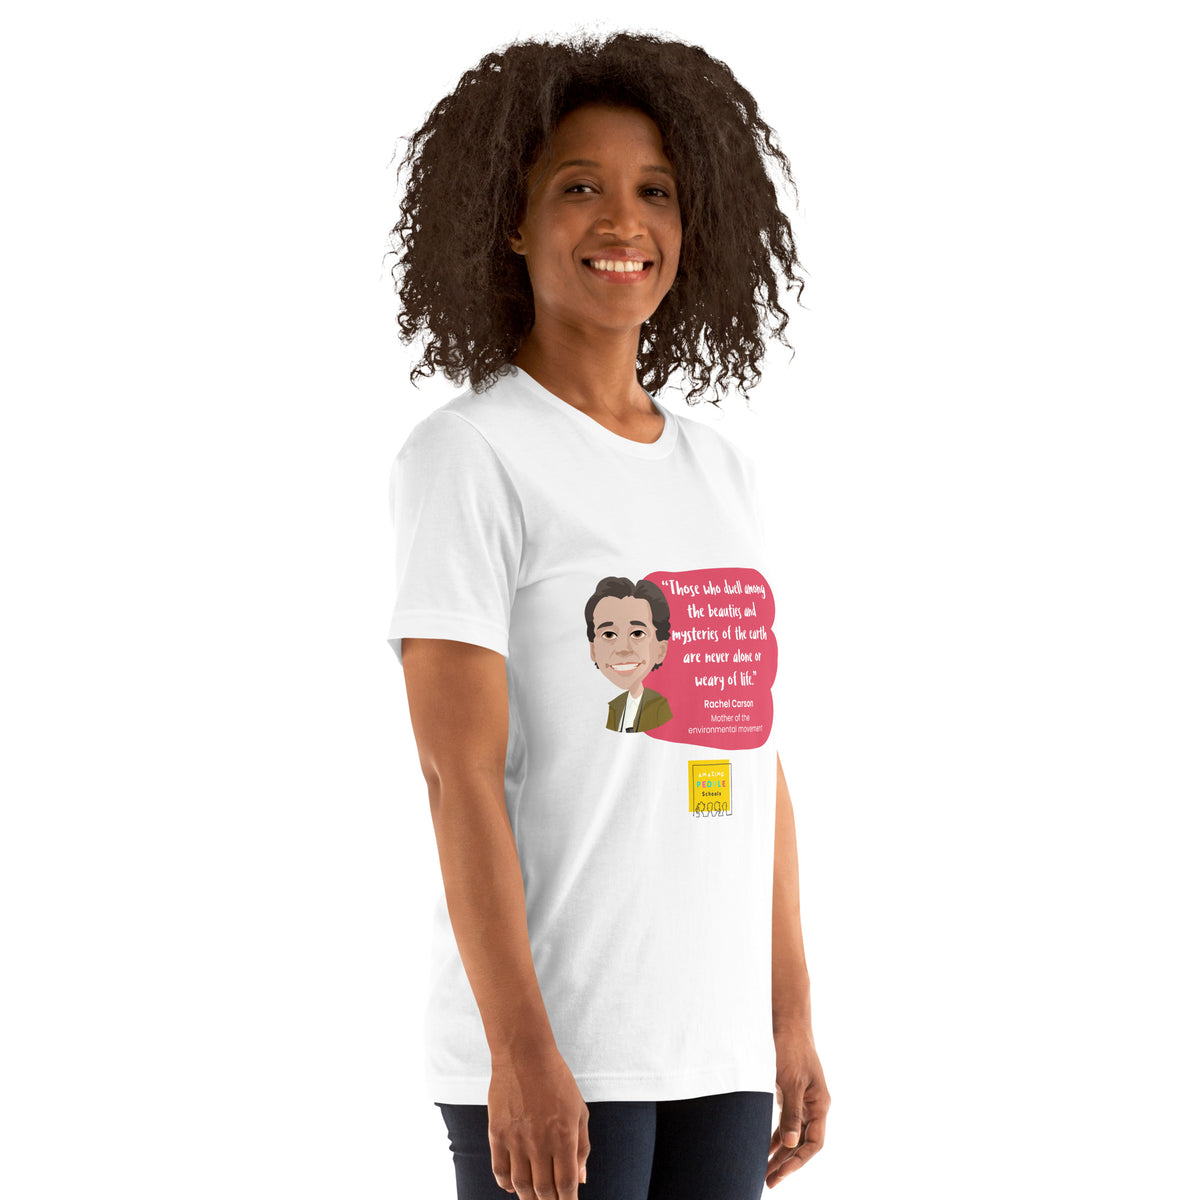 Rachel Carson Unisex T-shirt